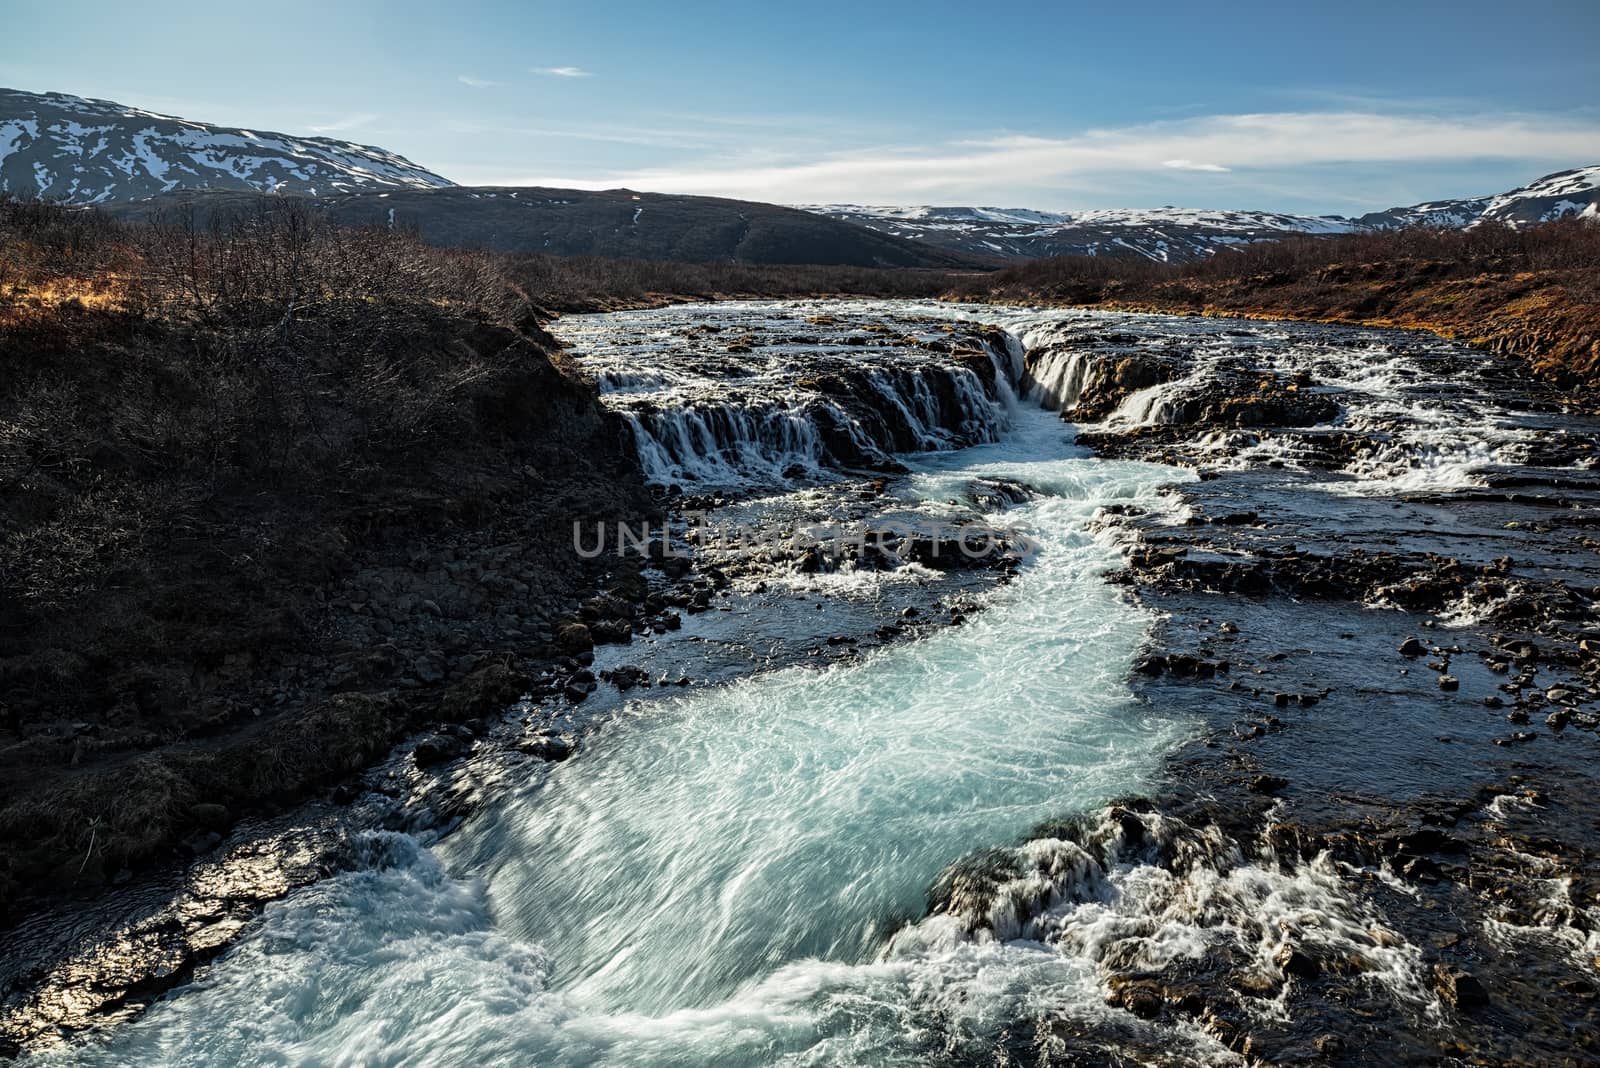 Bruarfoss waterfall in Iceland by LuigiMorbidelli